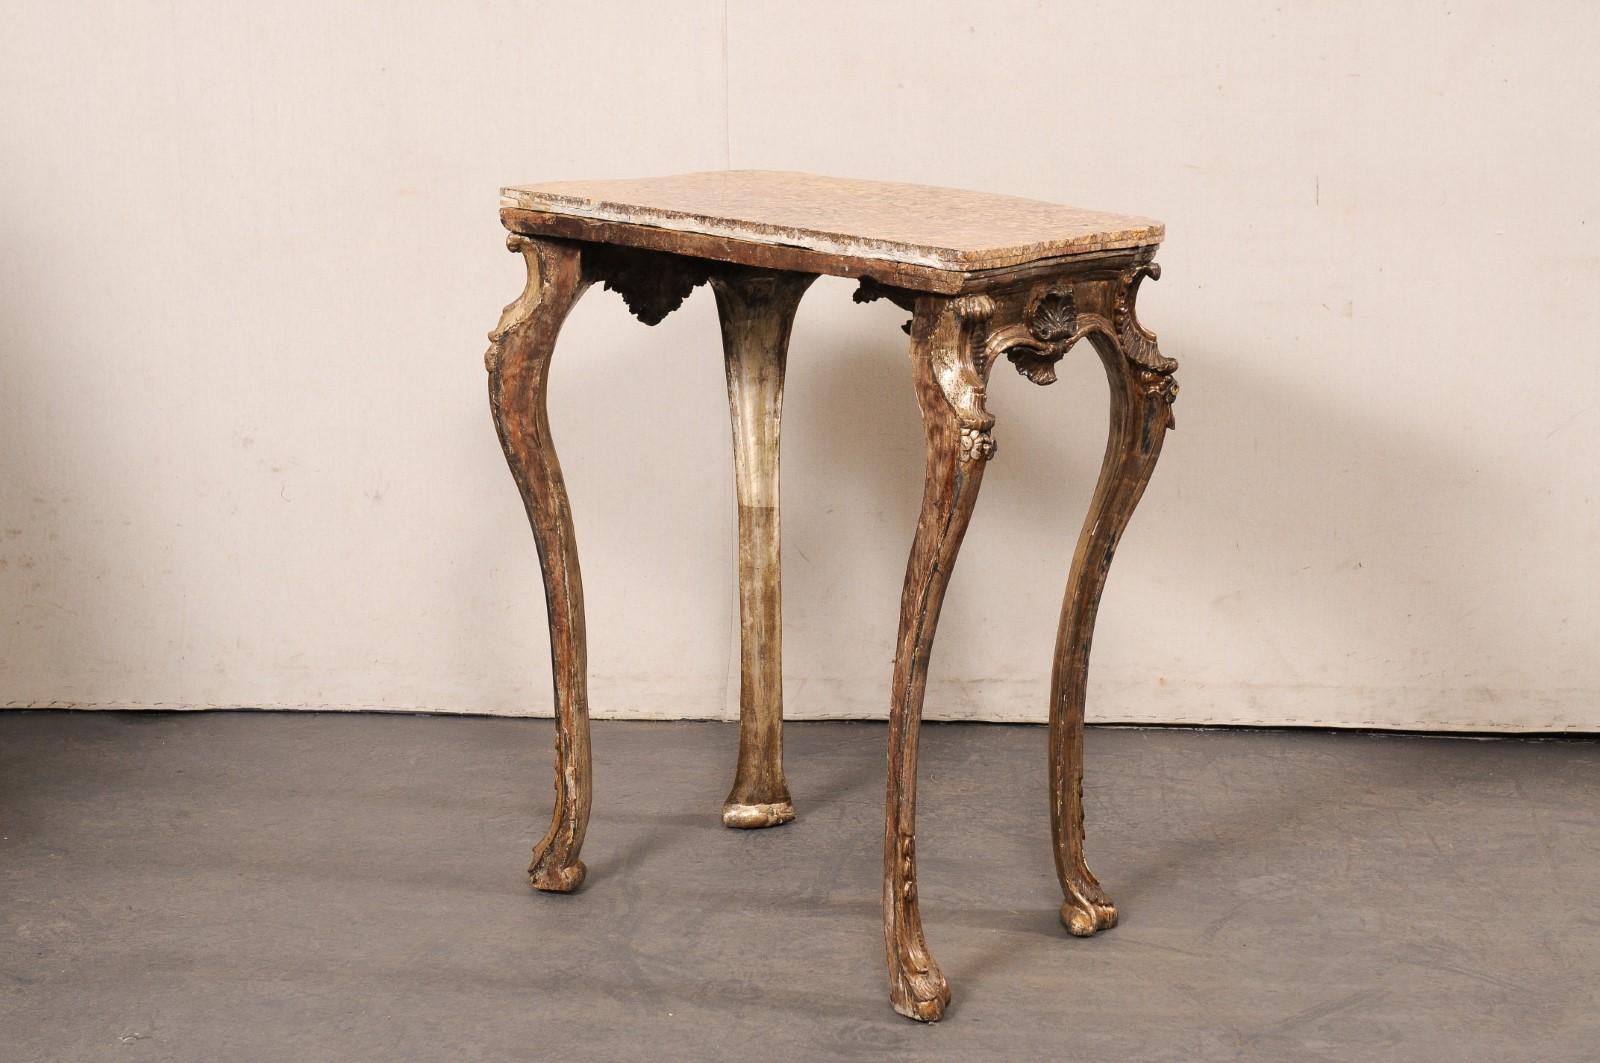 Italian Period Rococo Ornate Accent Table w/its Original Finish & Marble Top For Sale 1